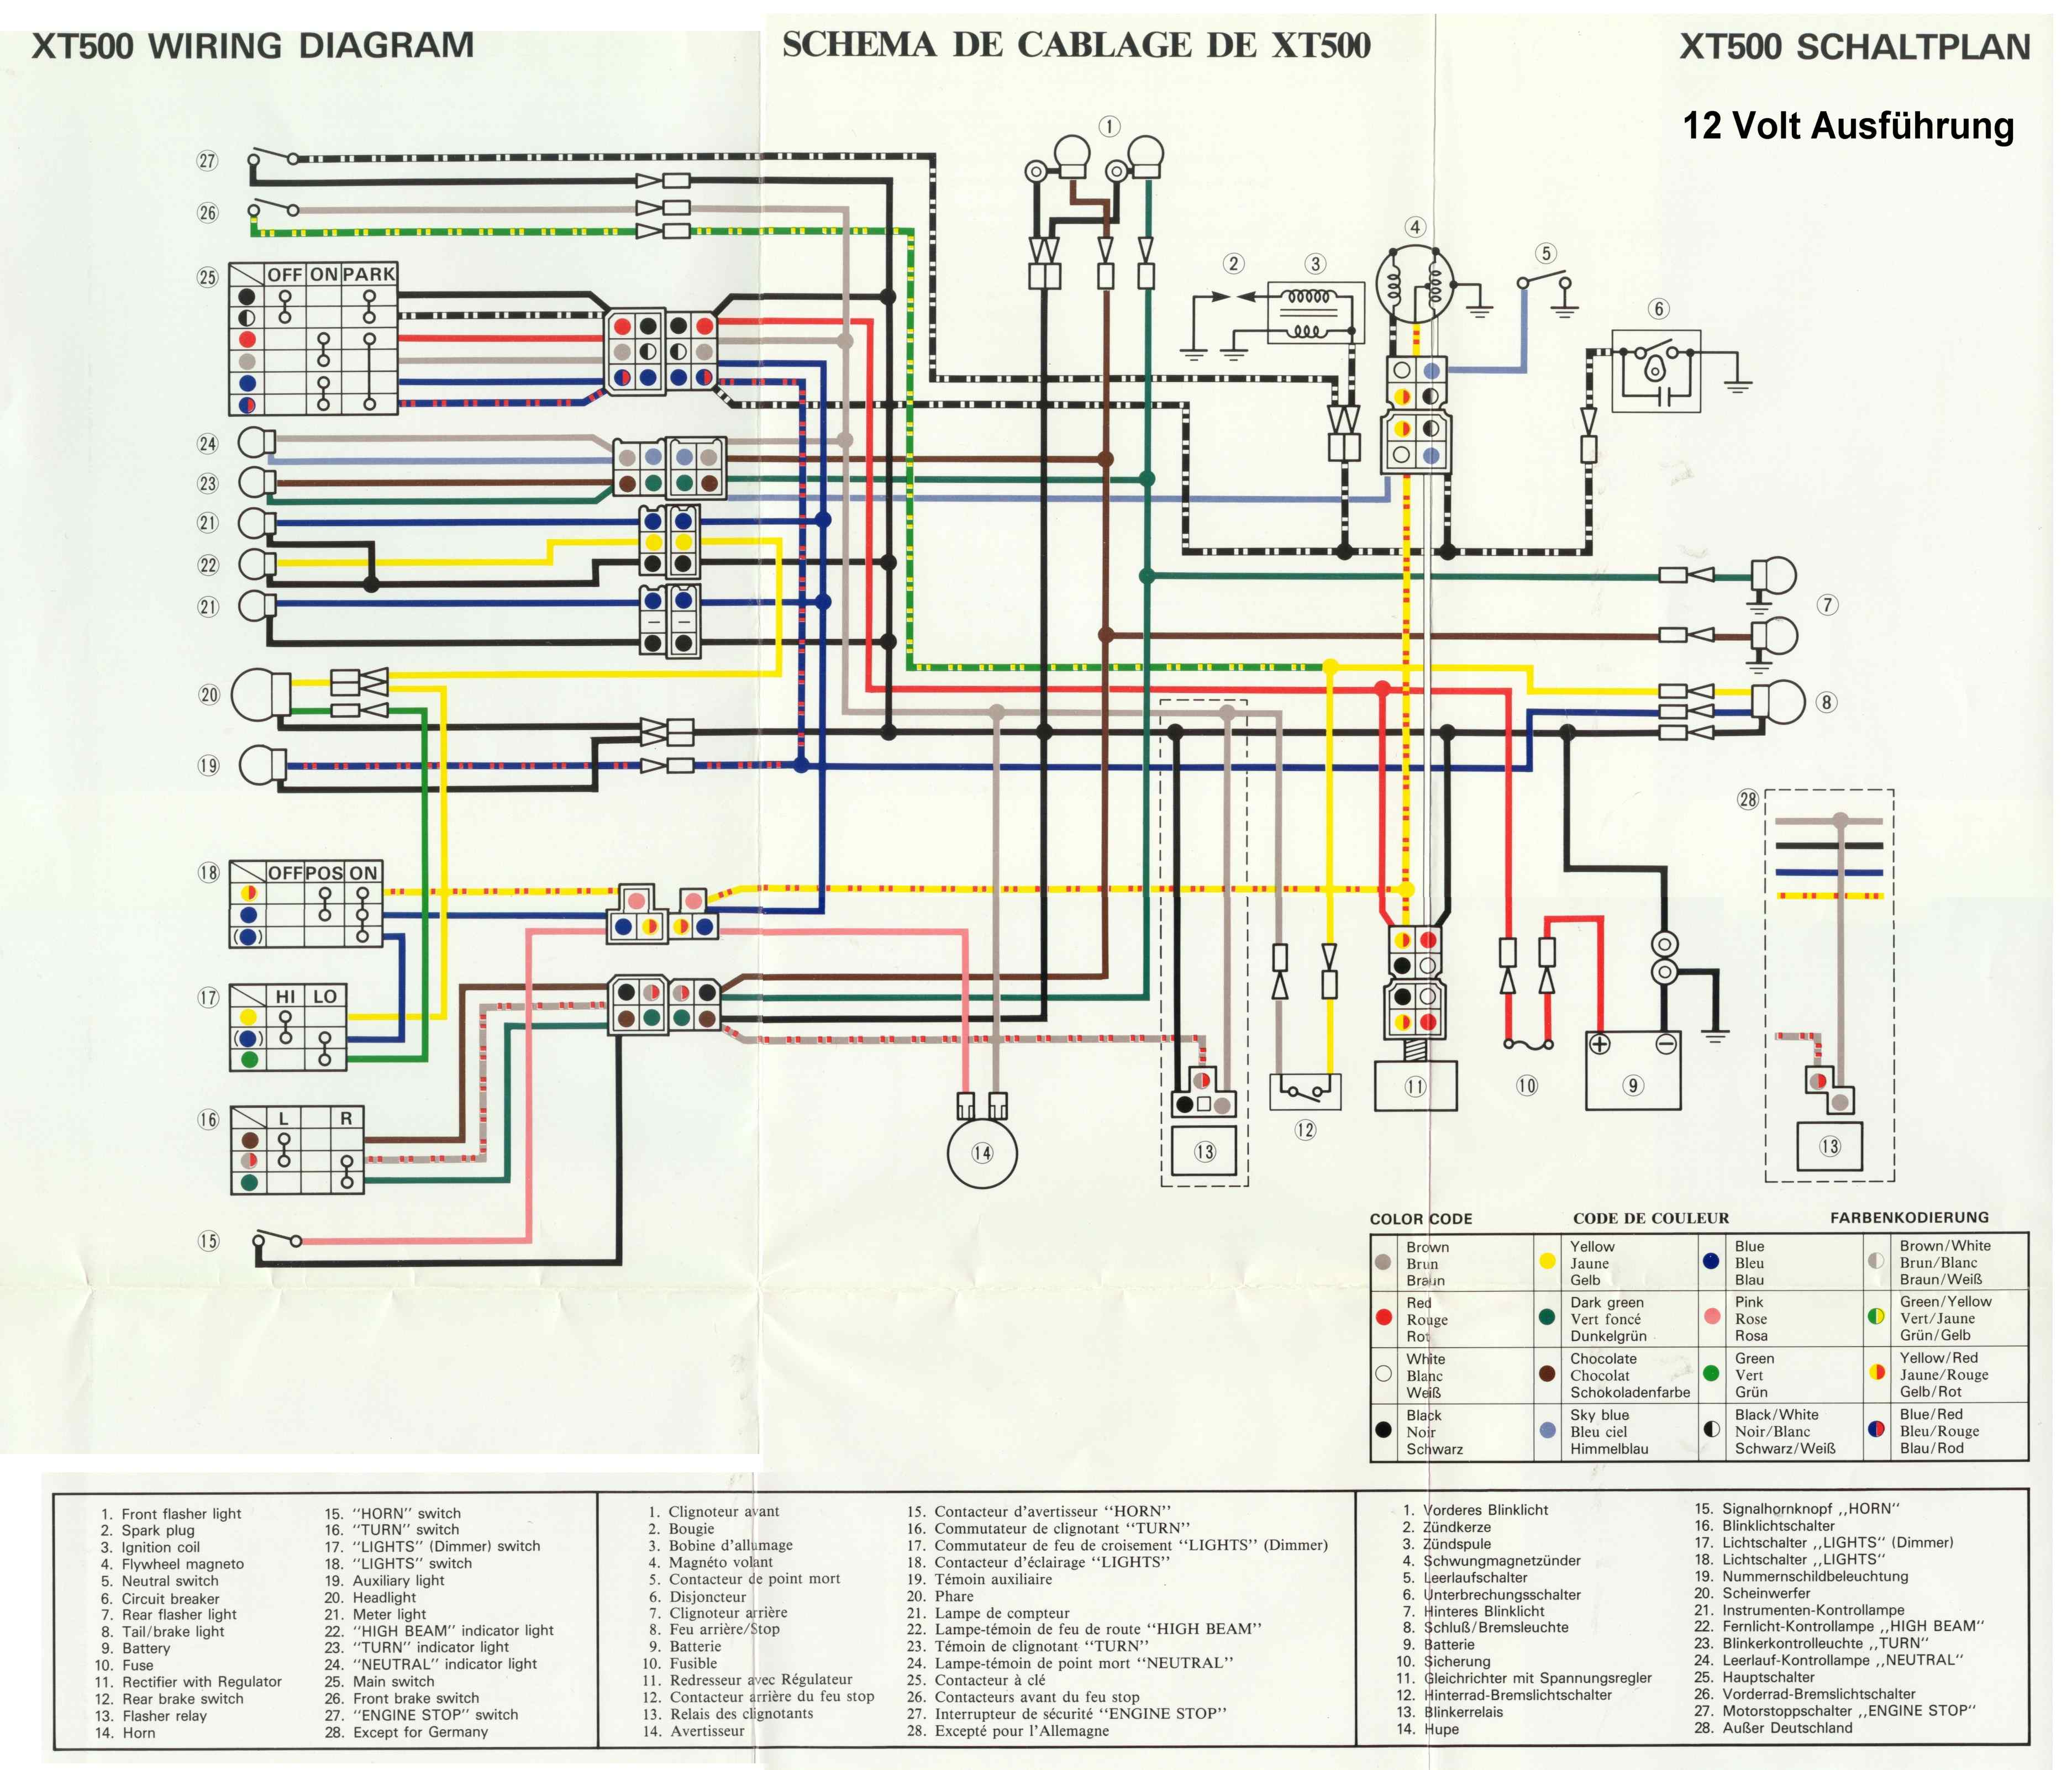 Xt500 Wiring Diagram